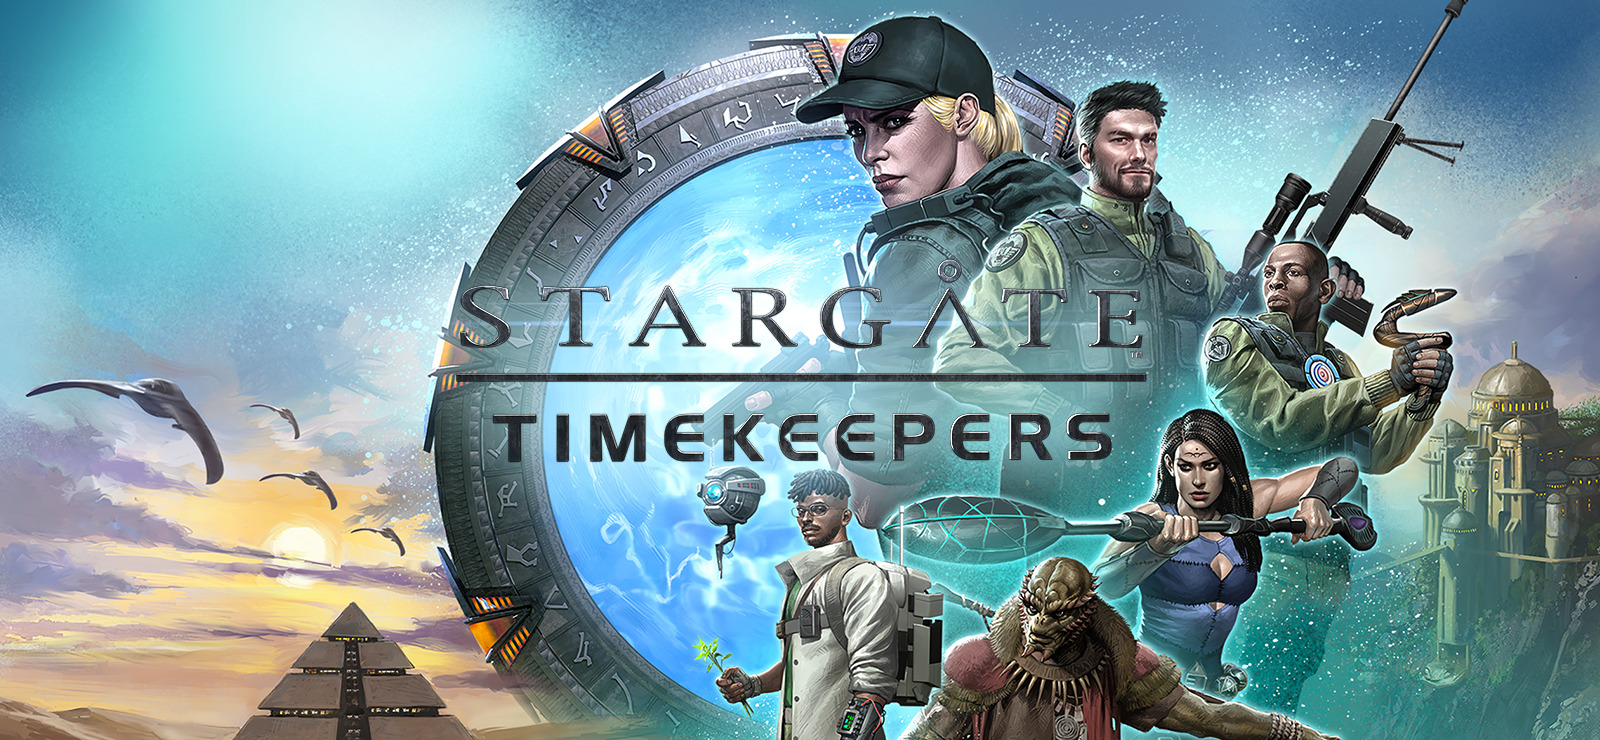 Stargate Timekeepers Release